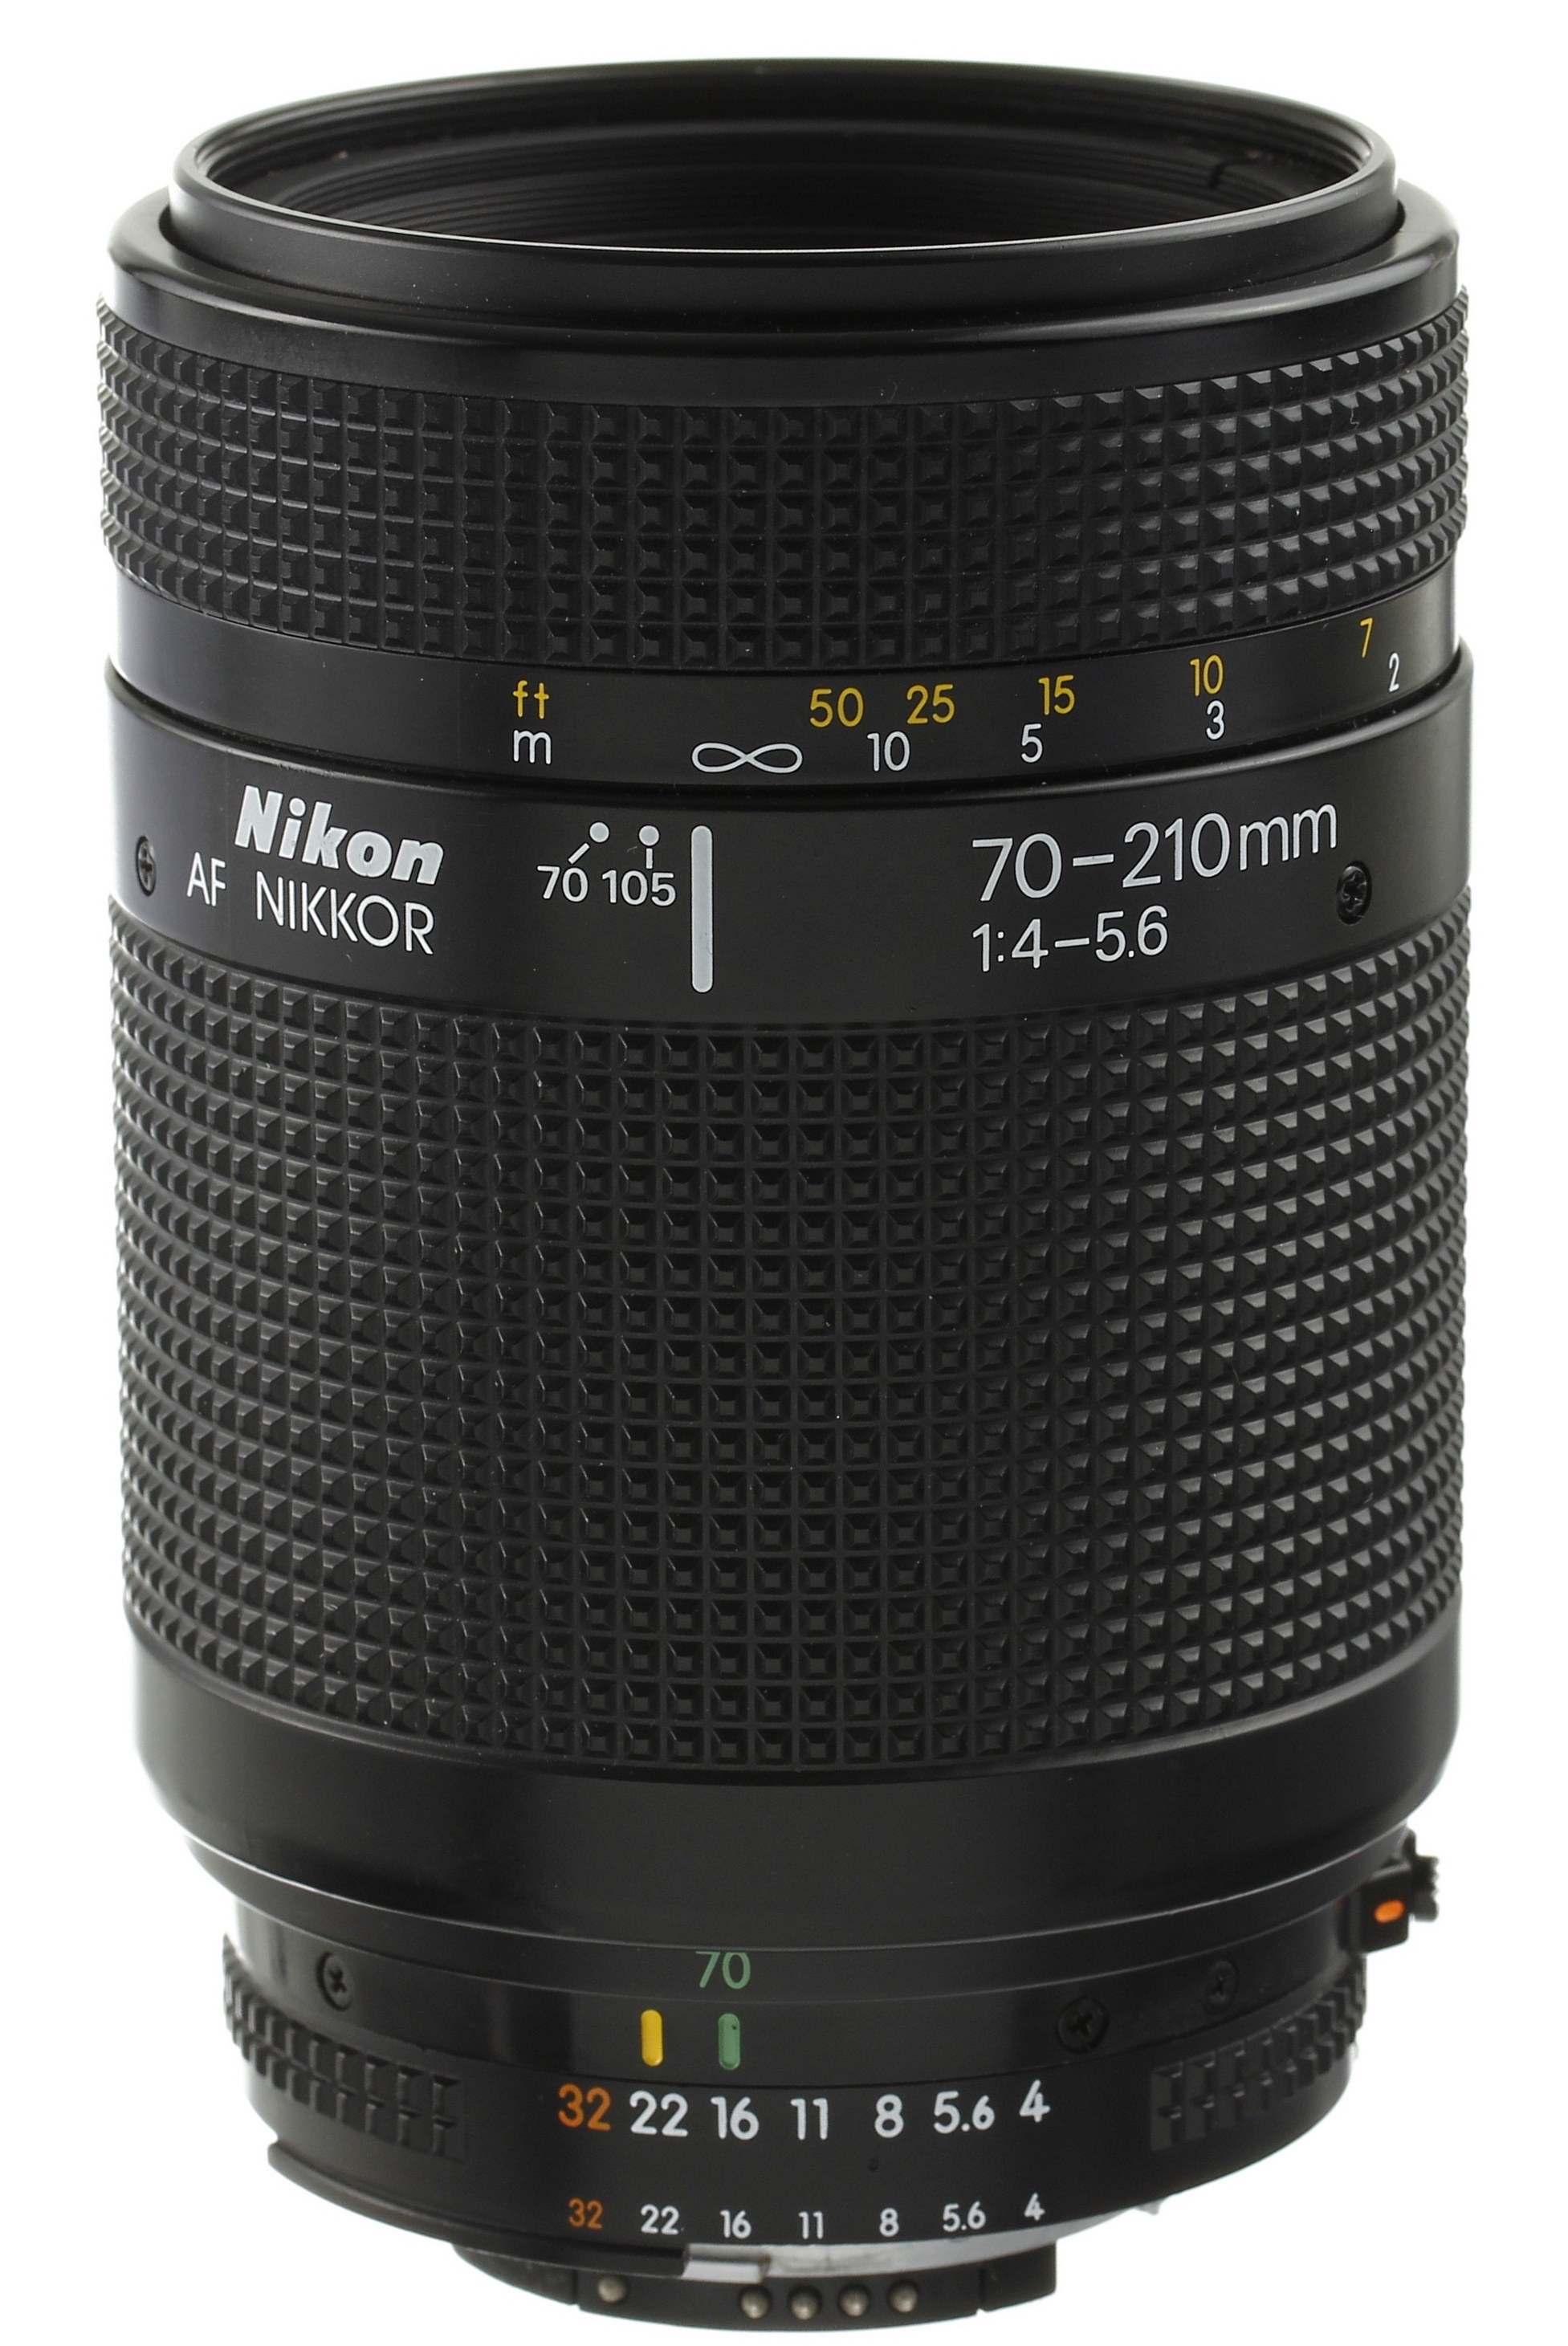 至上 Nikon AF NIKKOR 70-210mm f4-5.6D #0098